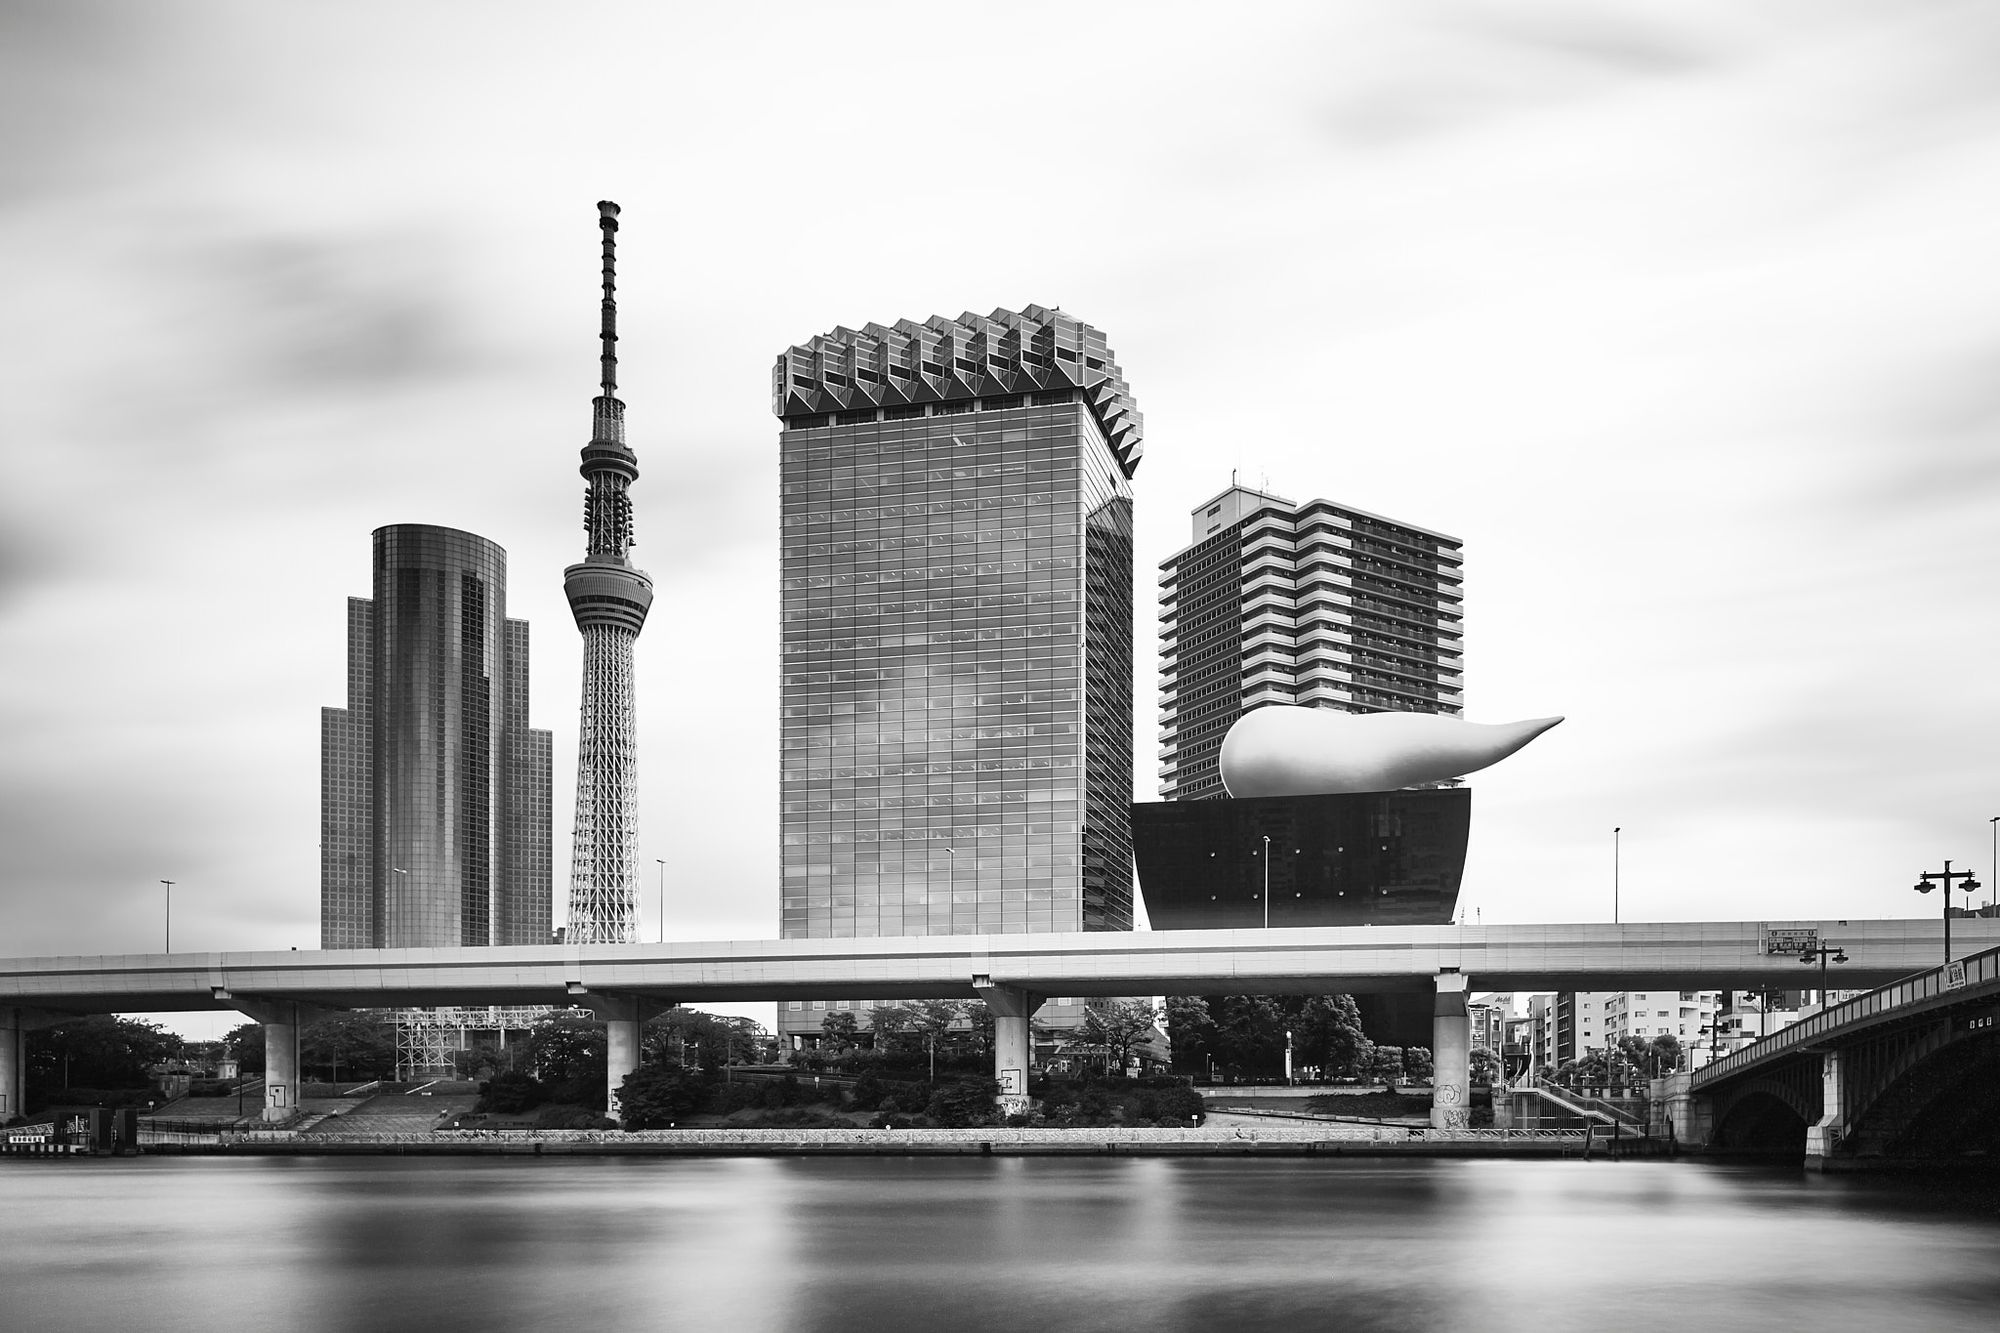 The Asahi Beer Tower and Sumida Park in Tokyo, Japan